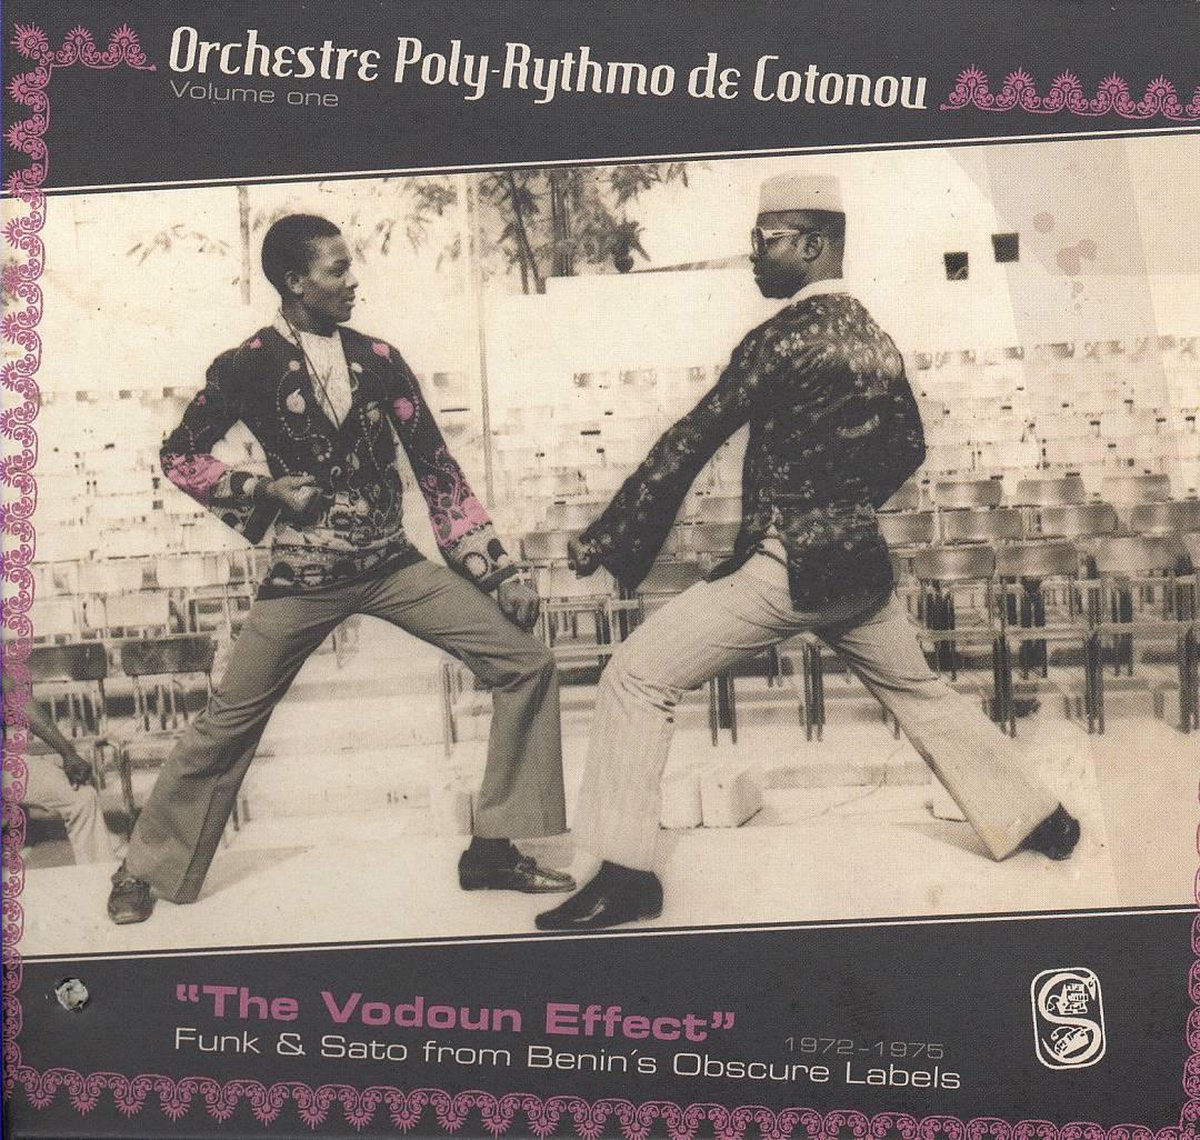 The Voudoun Effect - 1972-1 - Orchestre Poly-rithmo De Cotonou